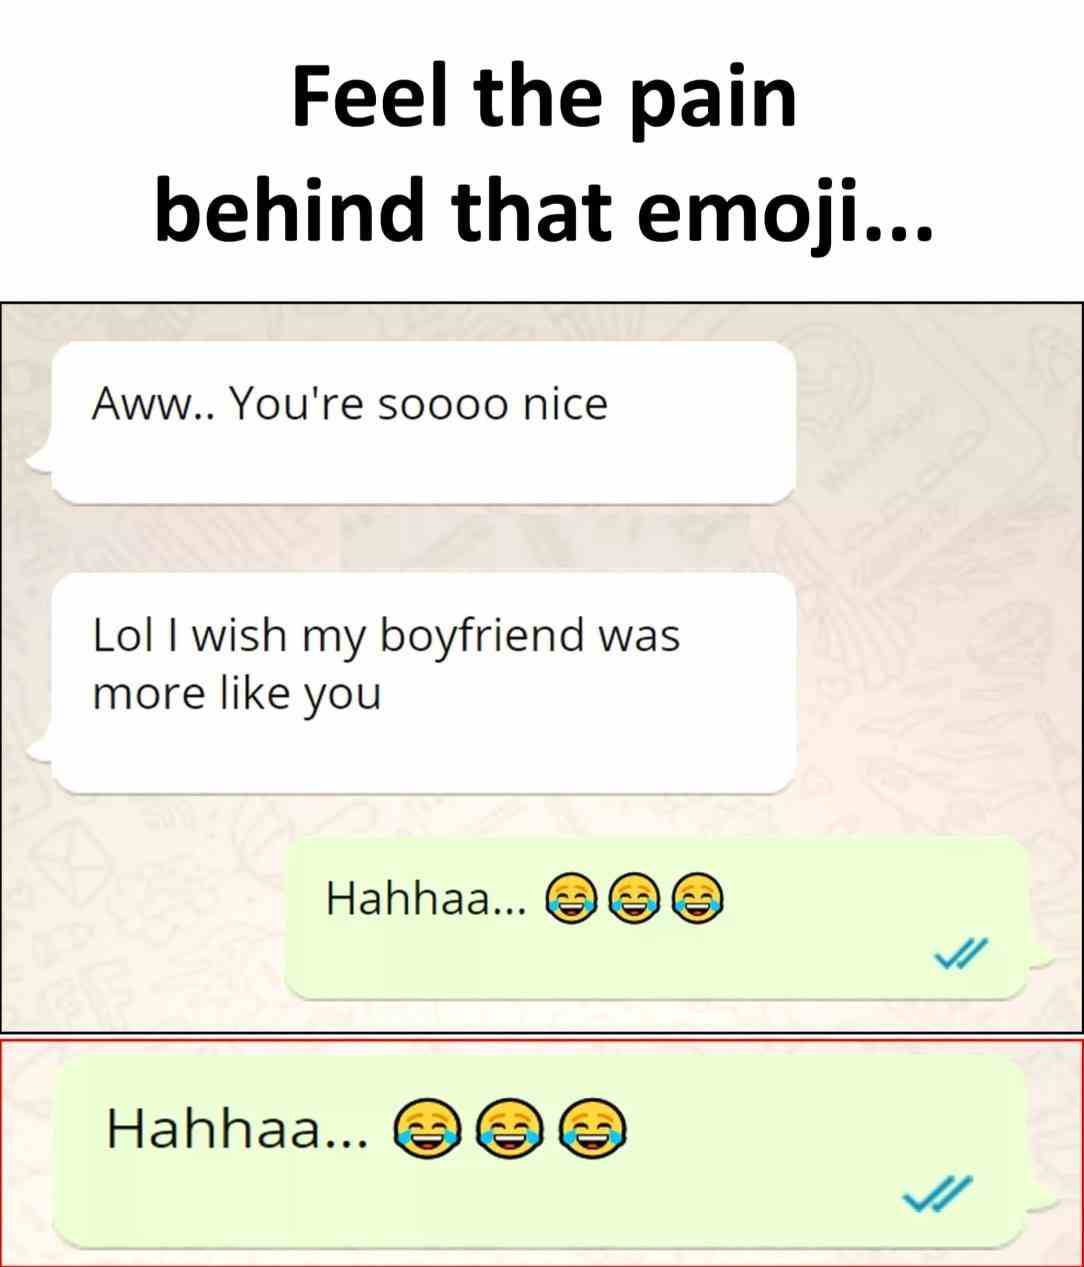 Feel the pain behind that emoji...